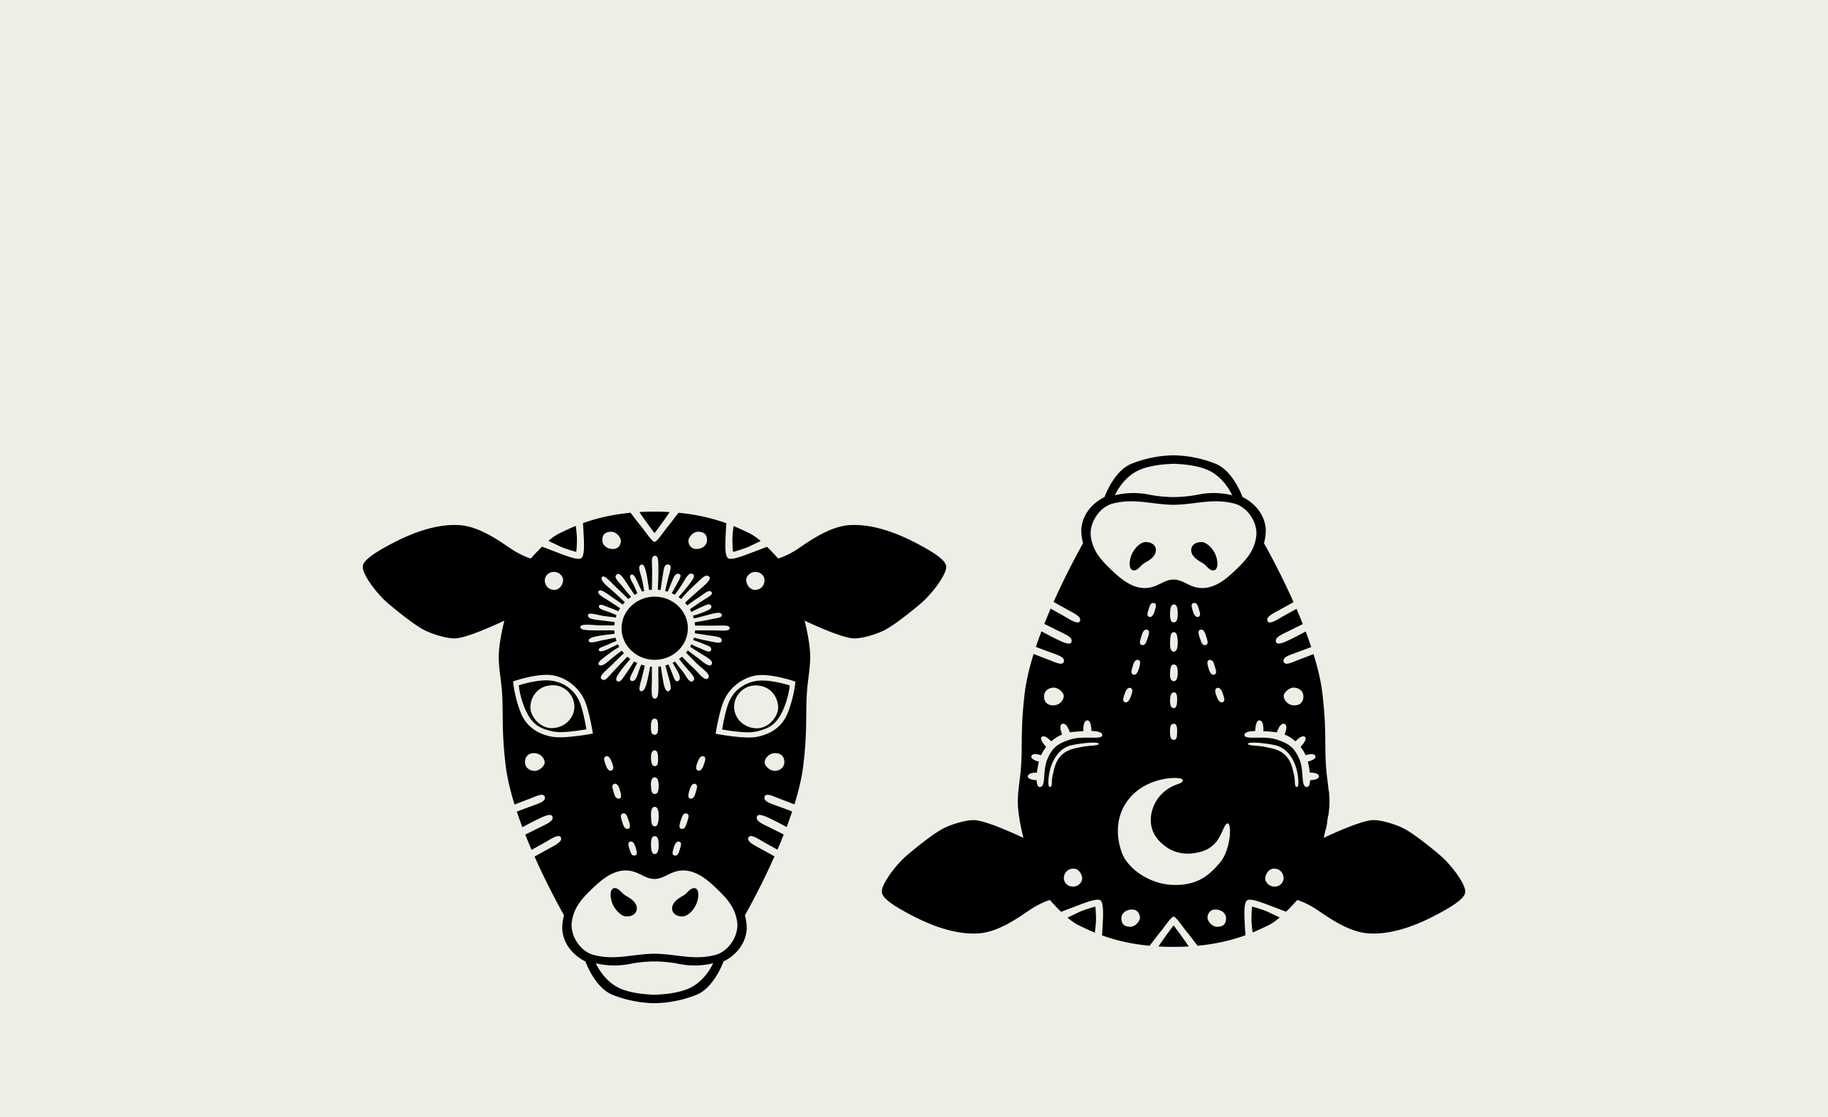 WDOM cow illustrations